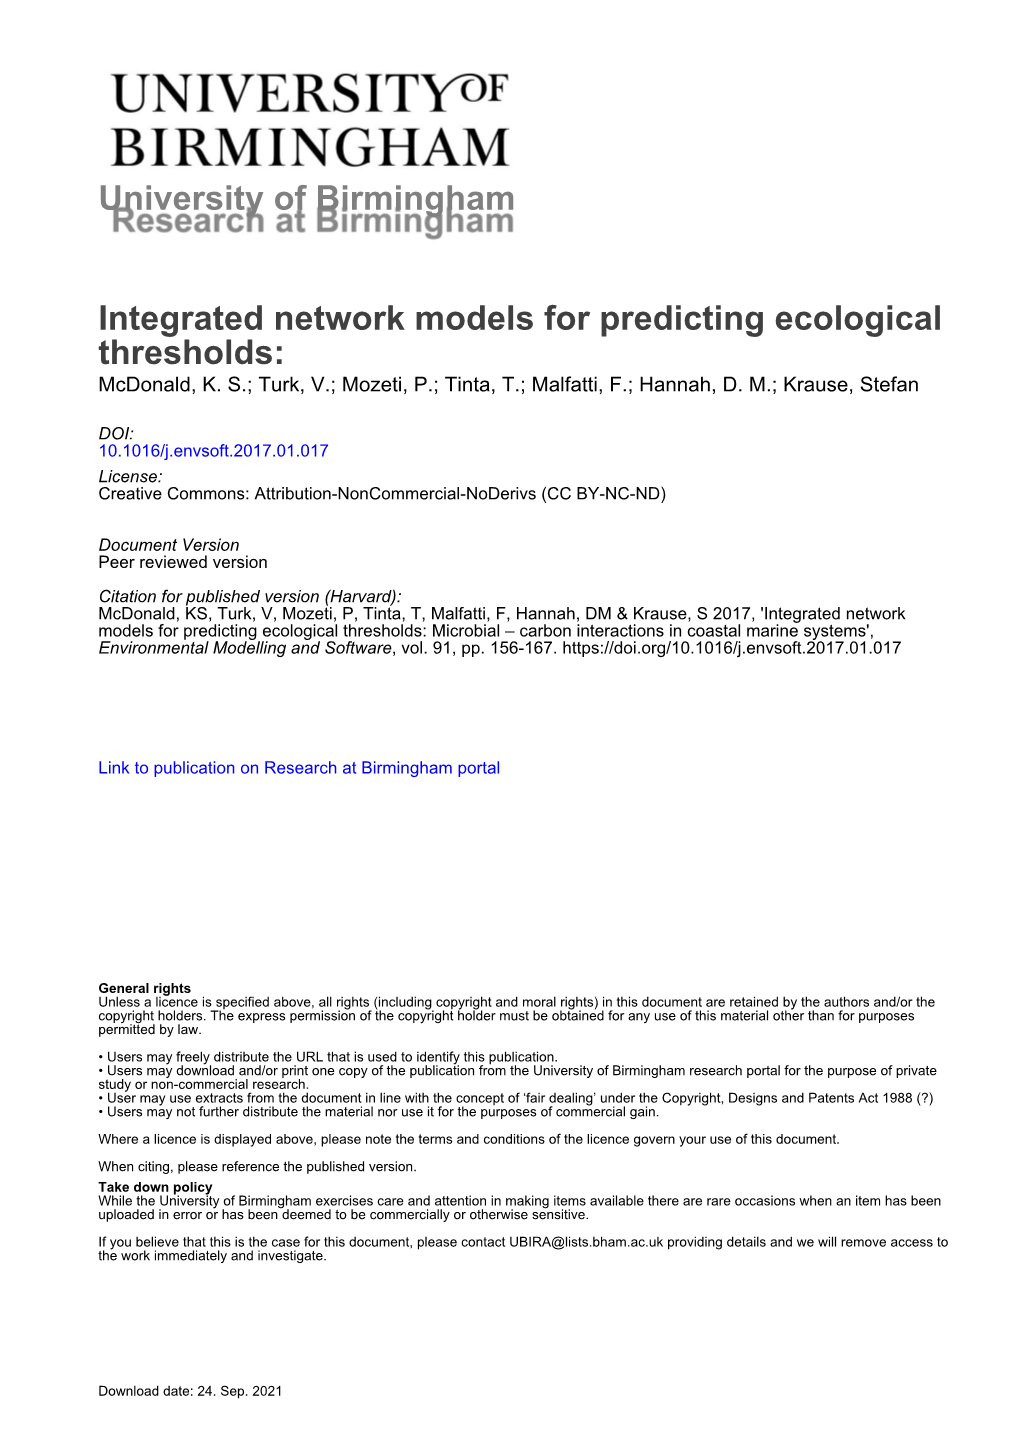 University of Birmingham Integrated Network Models for Predicting Ecological Thresholds